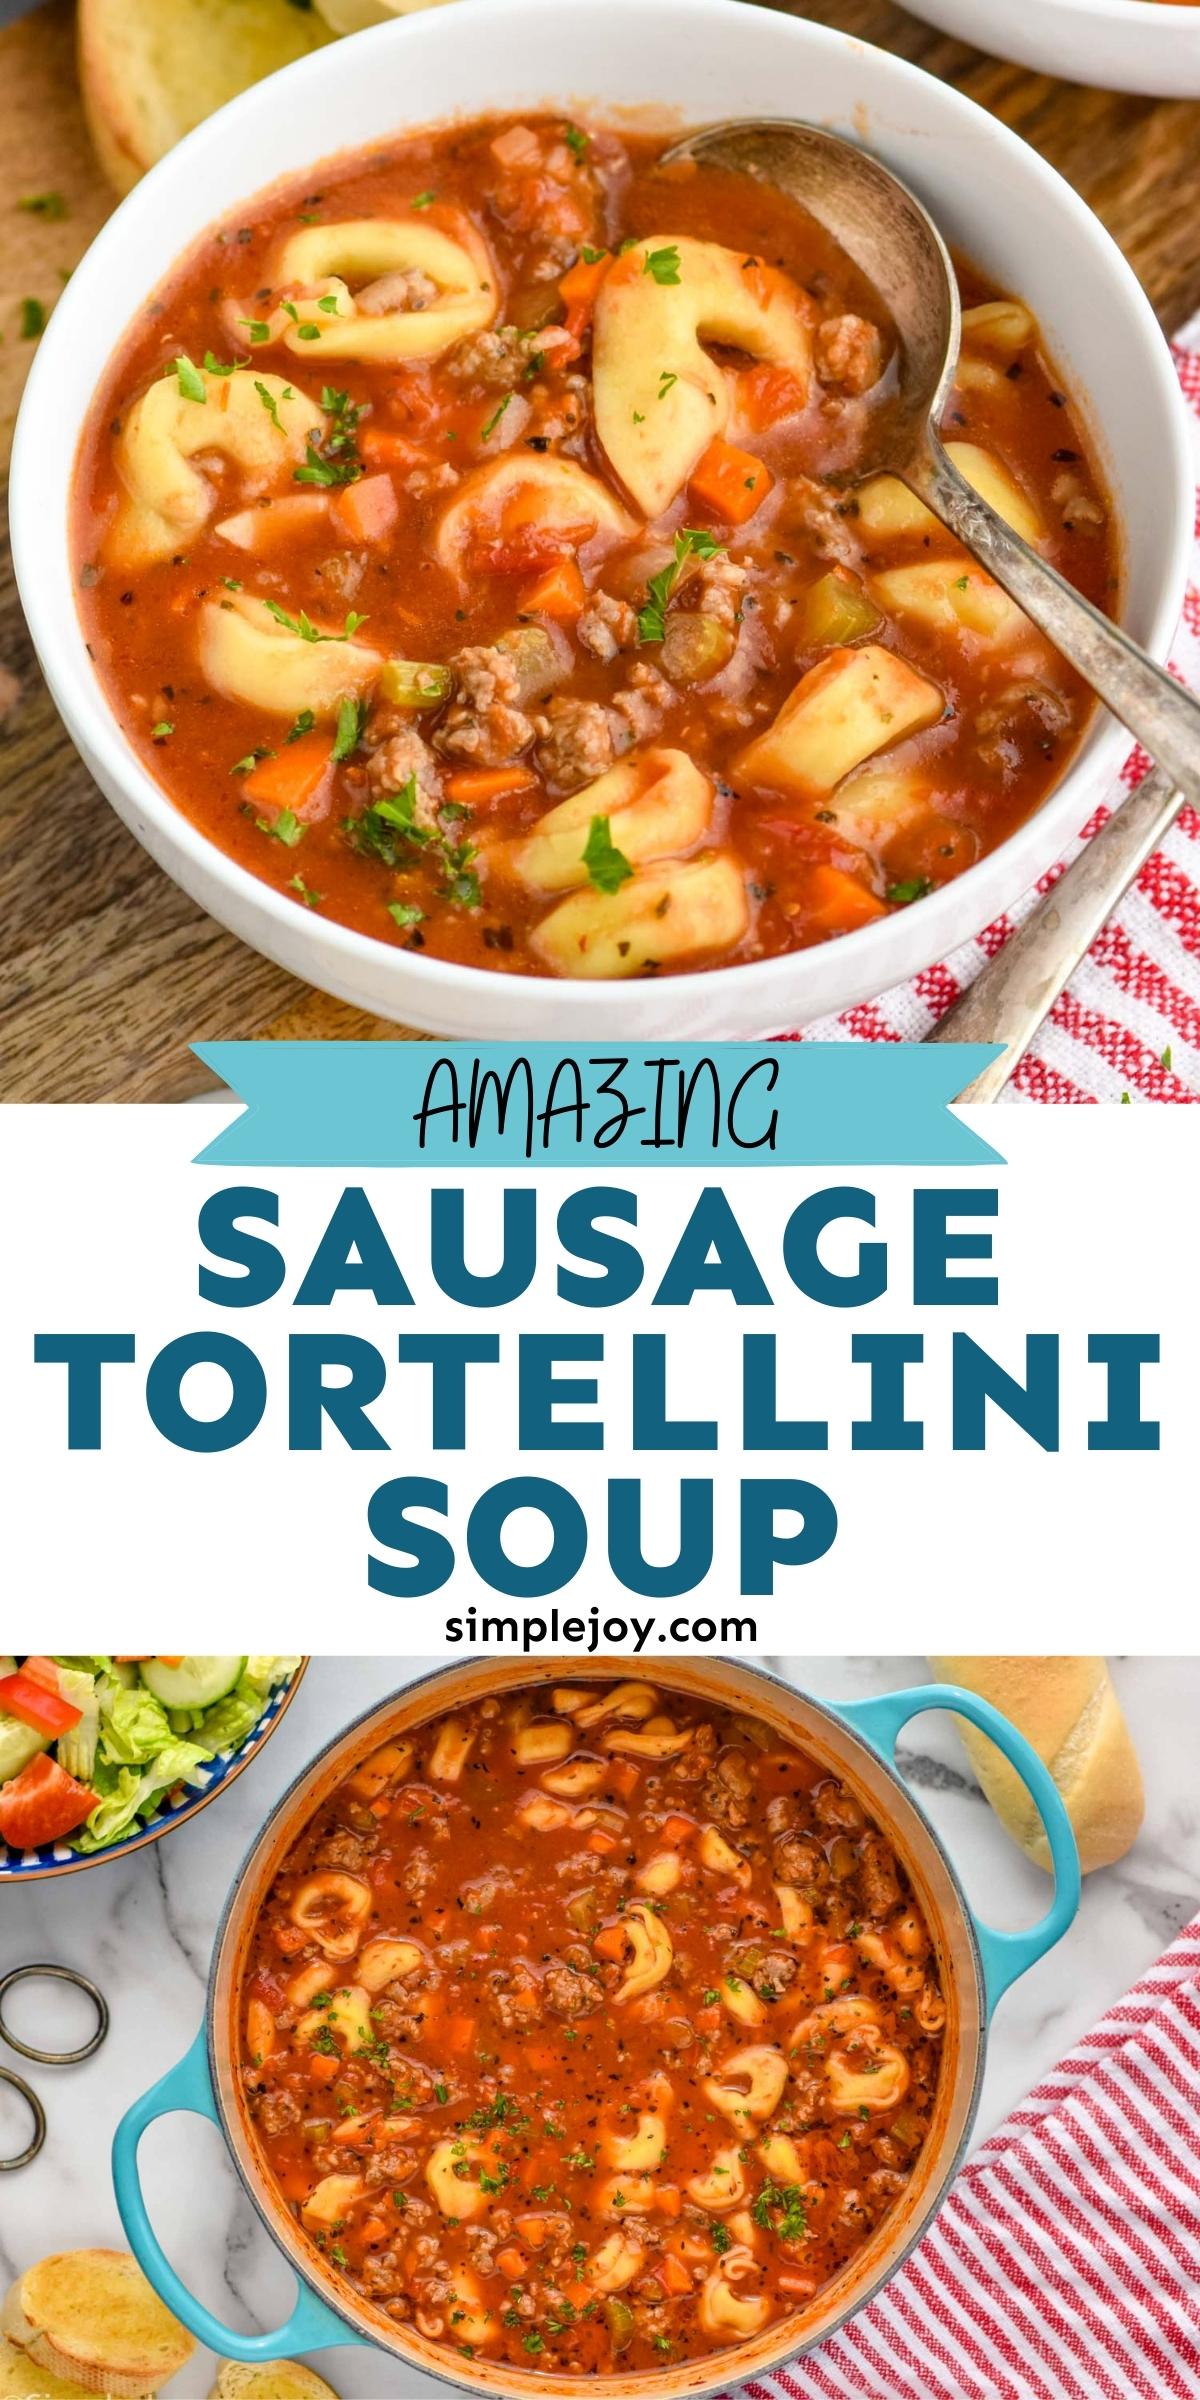 Sausage Tortellini Soup - Simple Joy